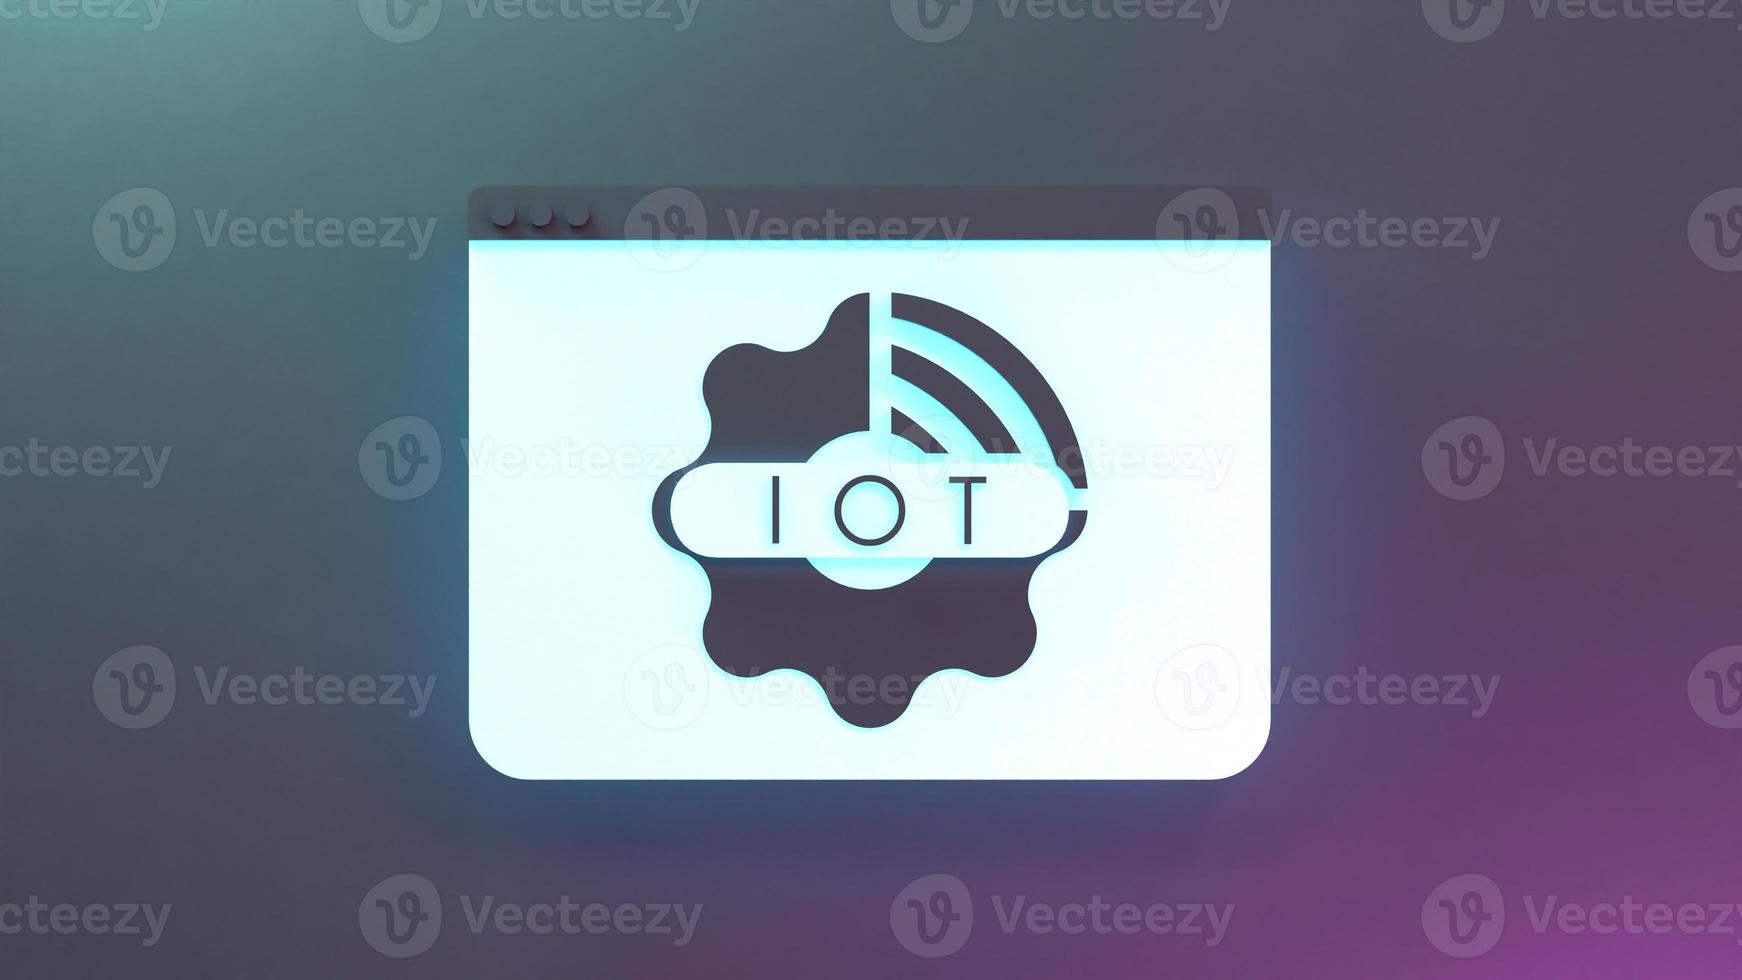 Neon Internet thing logo symbol. IoT concept. 3d render illustration. photo